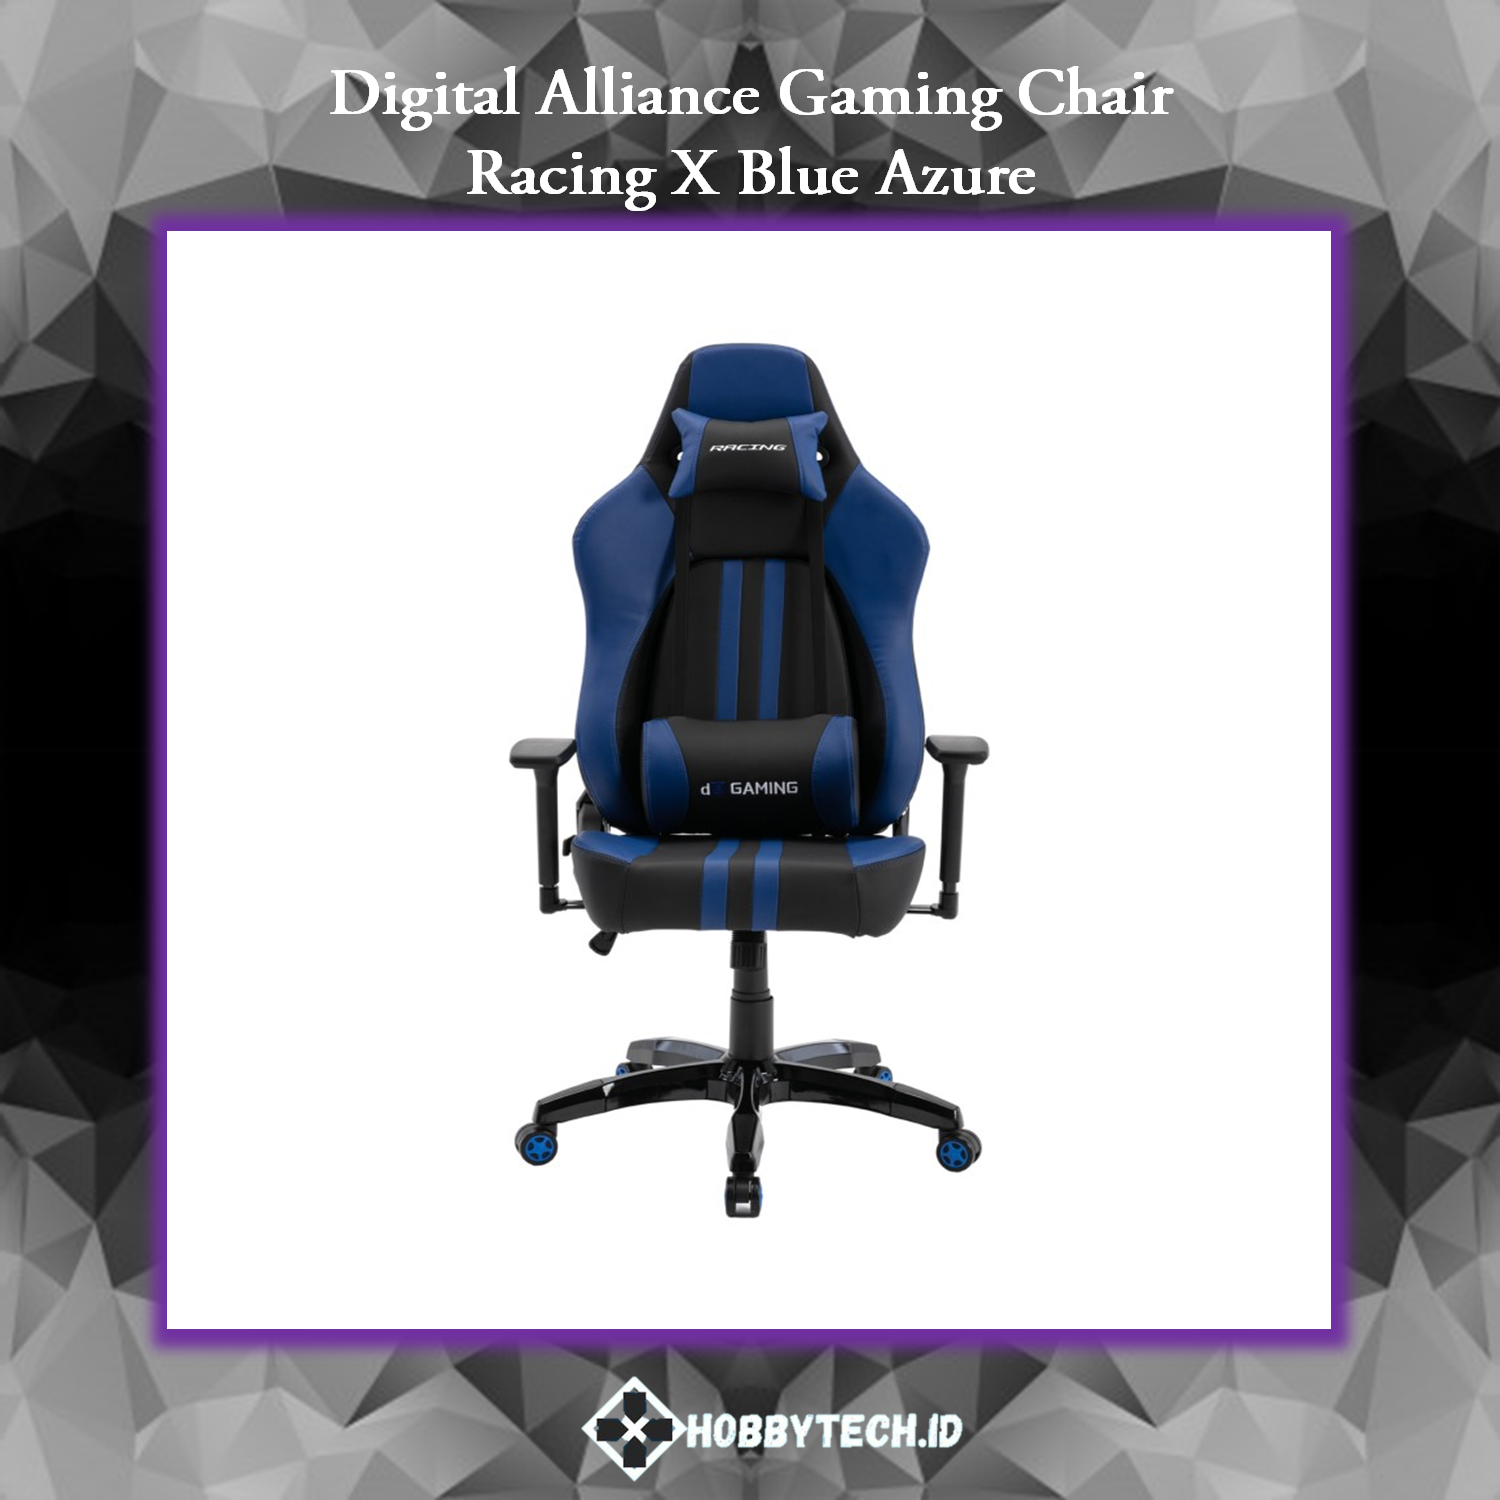 Digital Alliance Gaming Chair Racing X Blue Azure